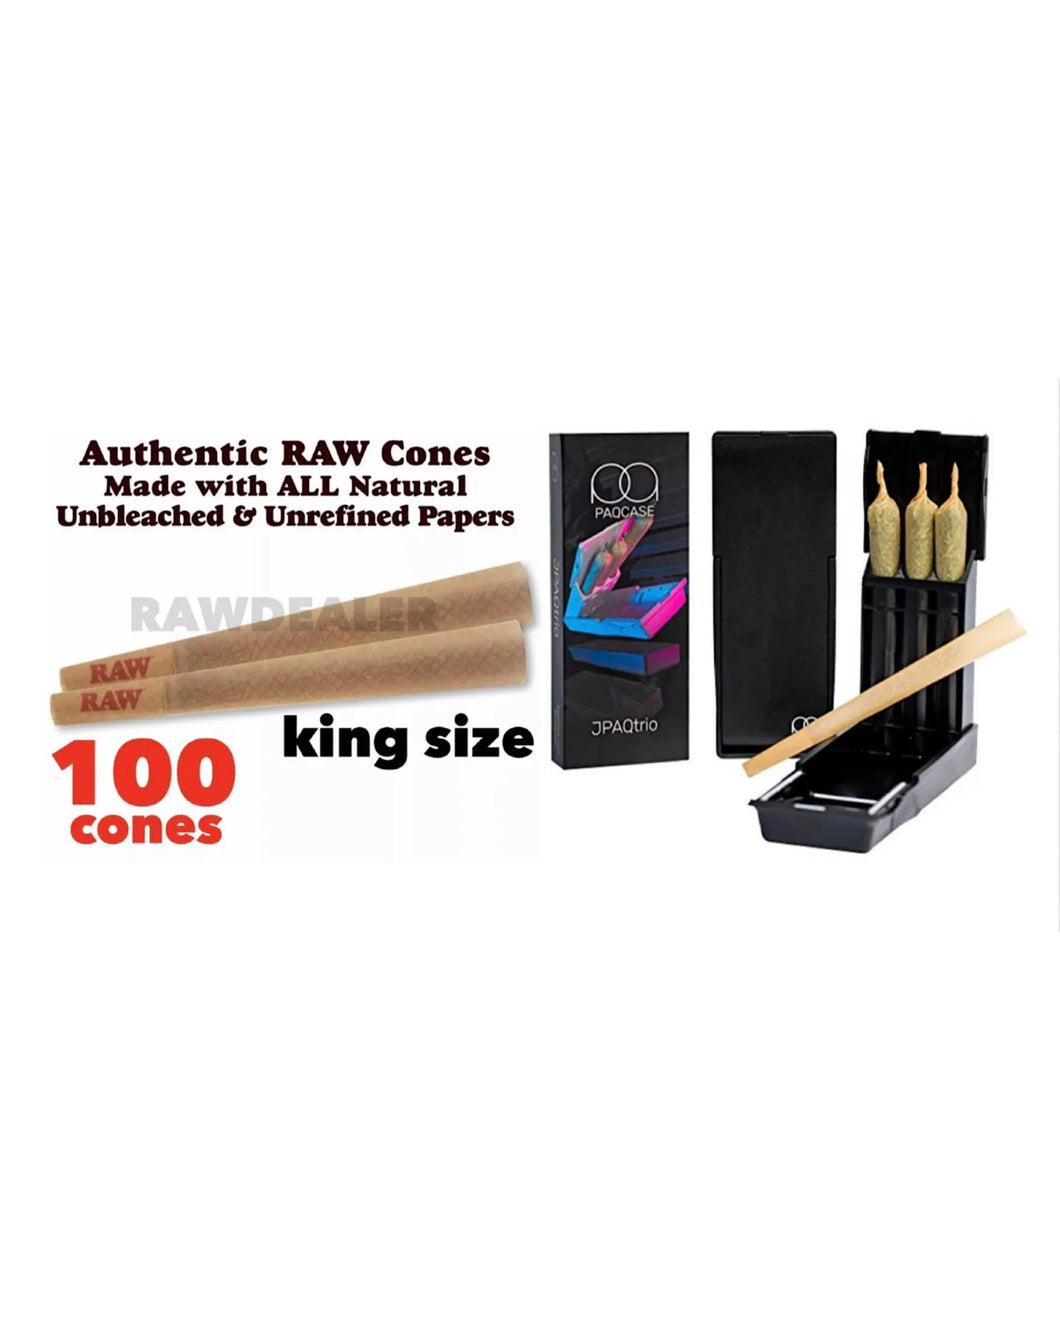 raw cone classic king size pre rolled cone(100 pack)+JPAQ trio cone holder case